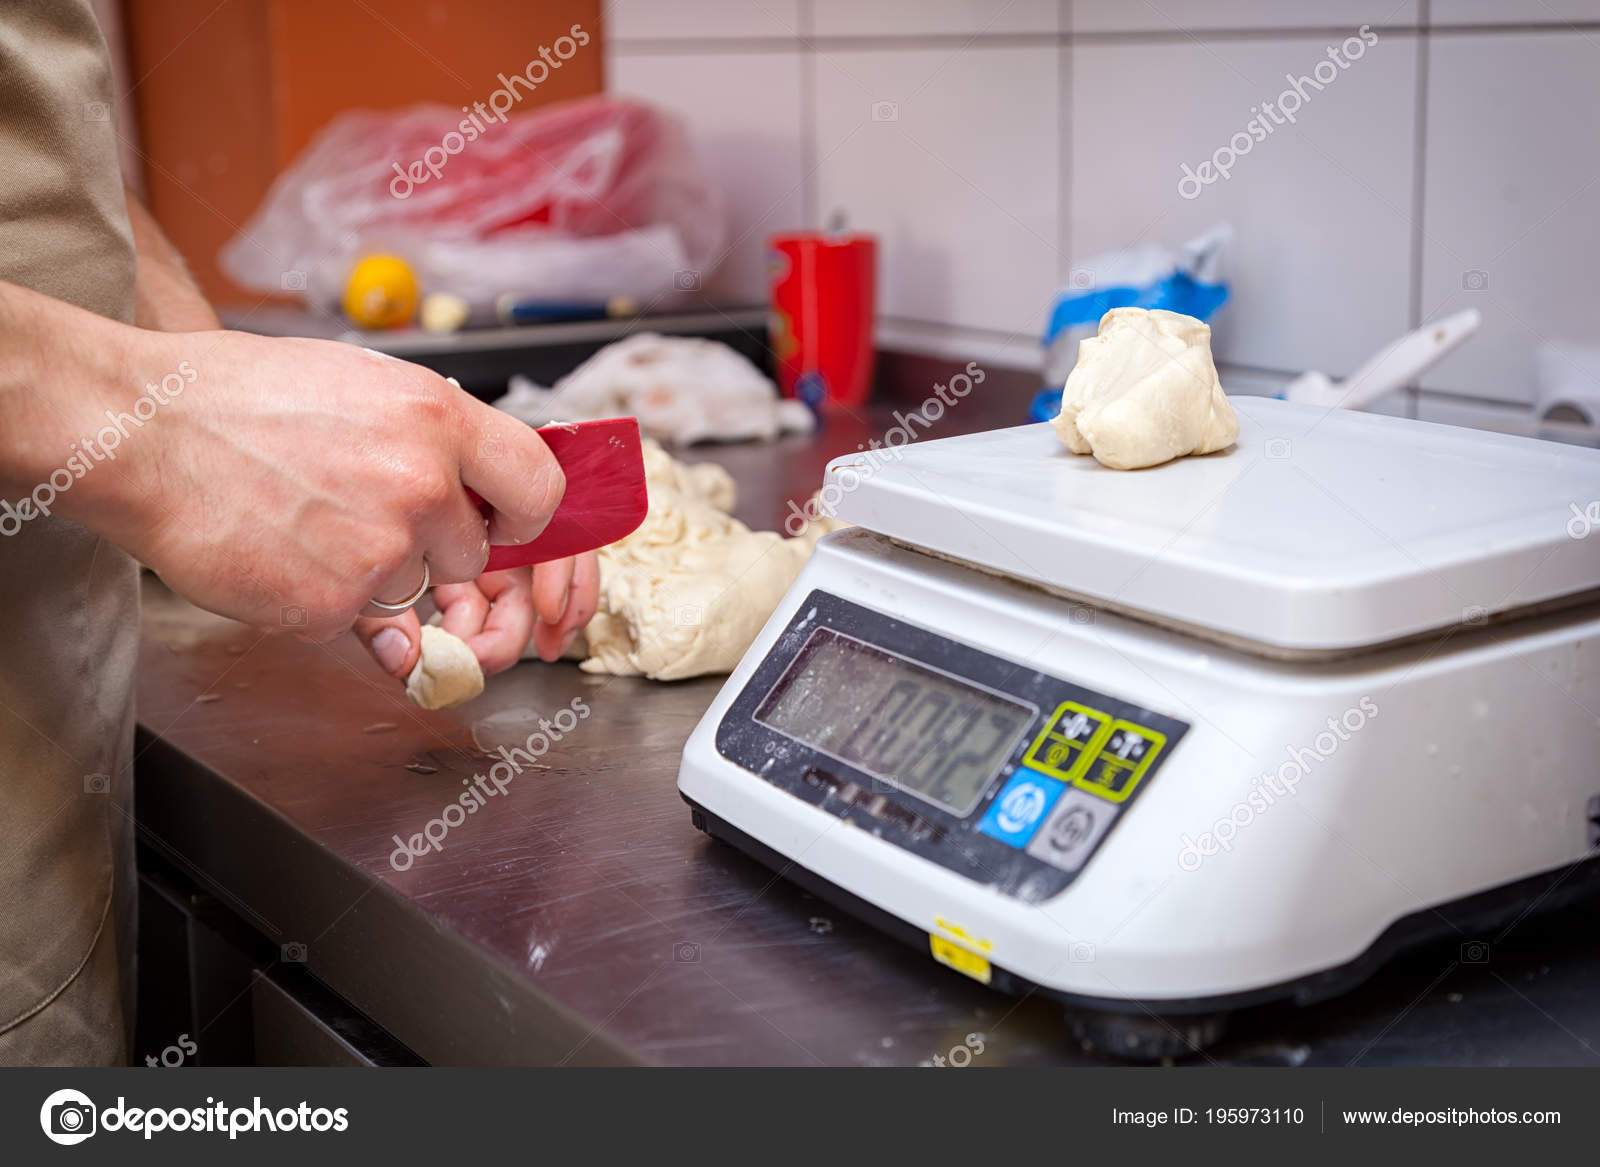 https://st3.depositphotos.com/11618586/19597/i/1600/depositphotos_195973110-stock-photo-close-female-baker-weighs-kitchen.jpg